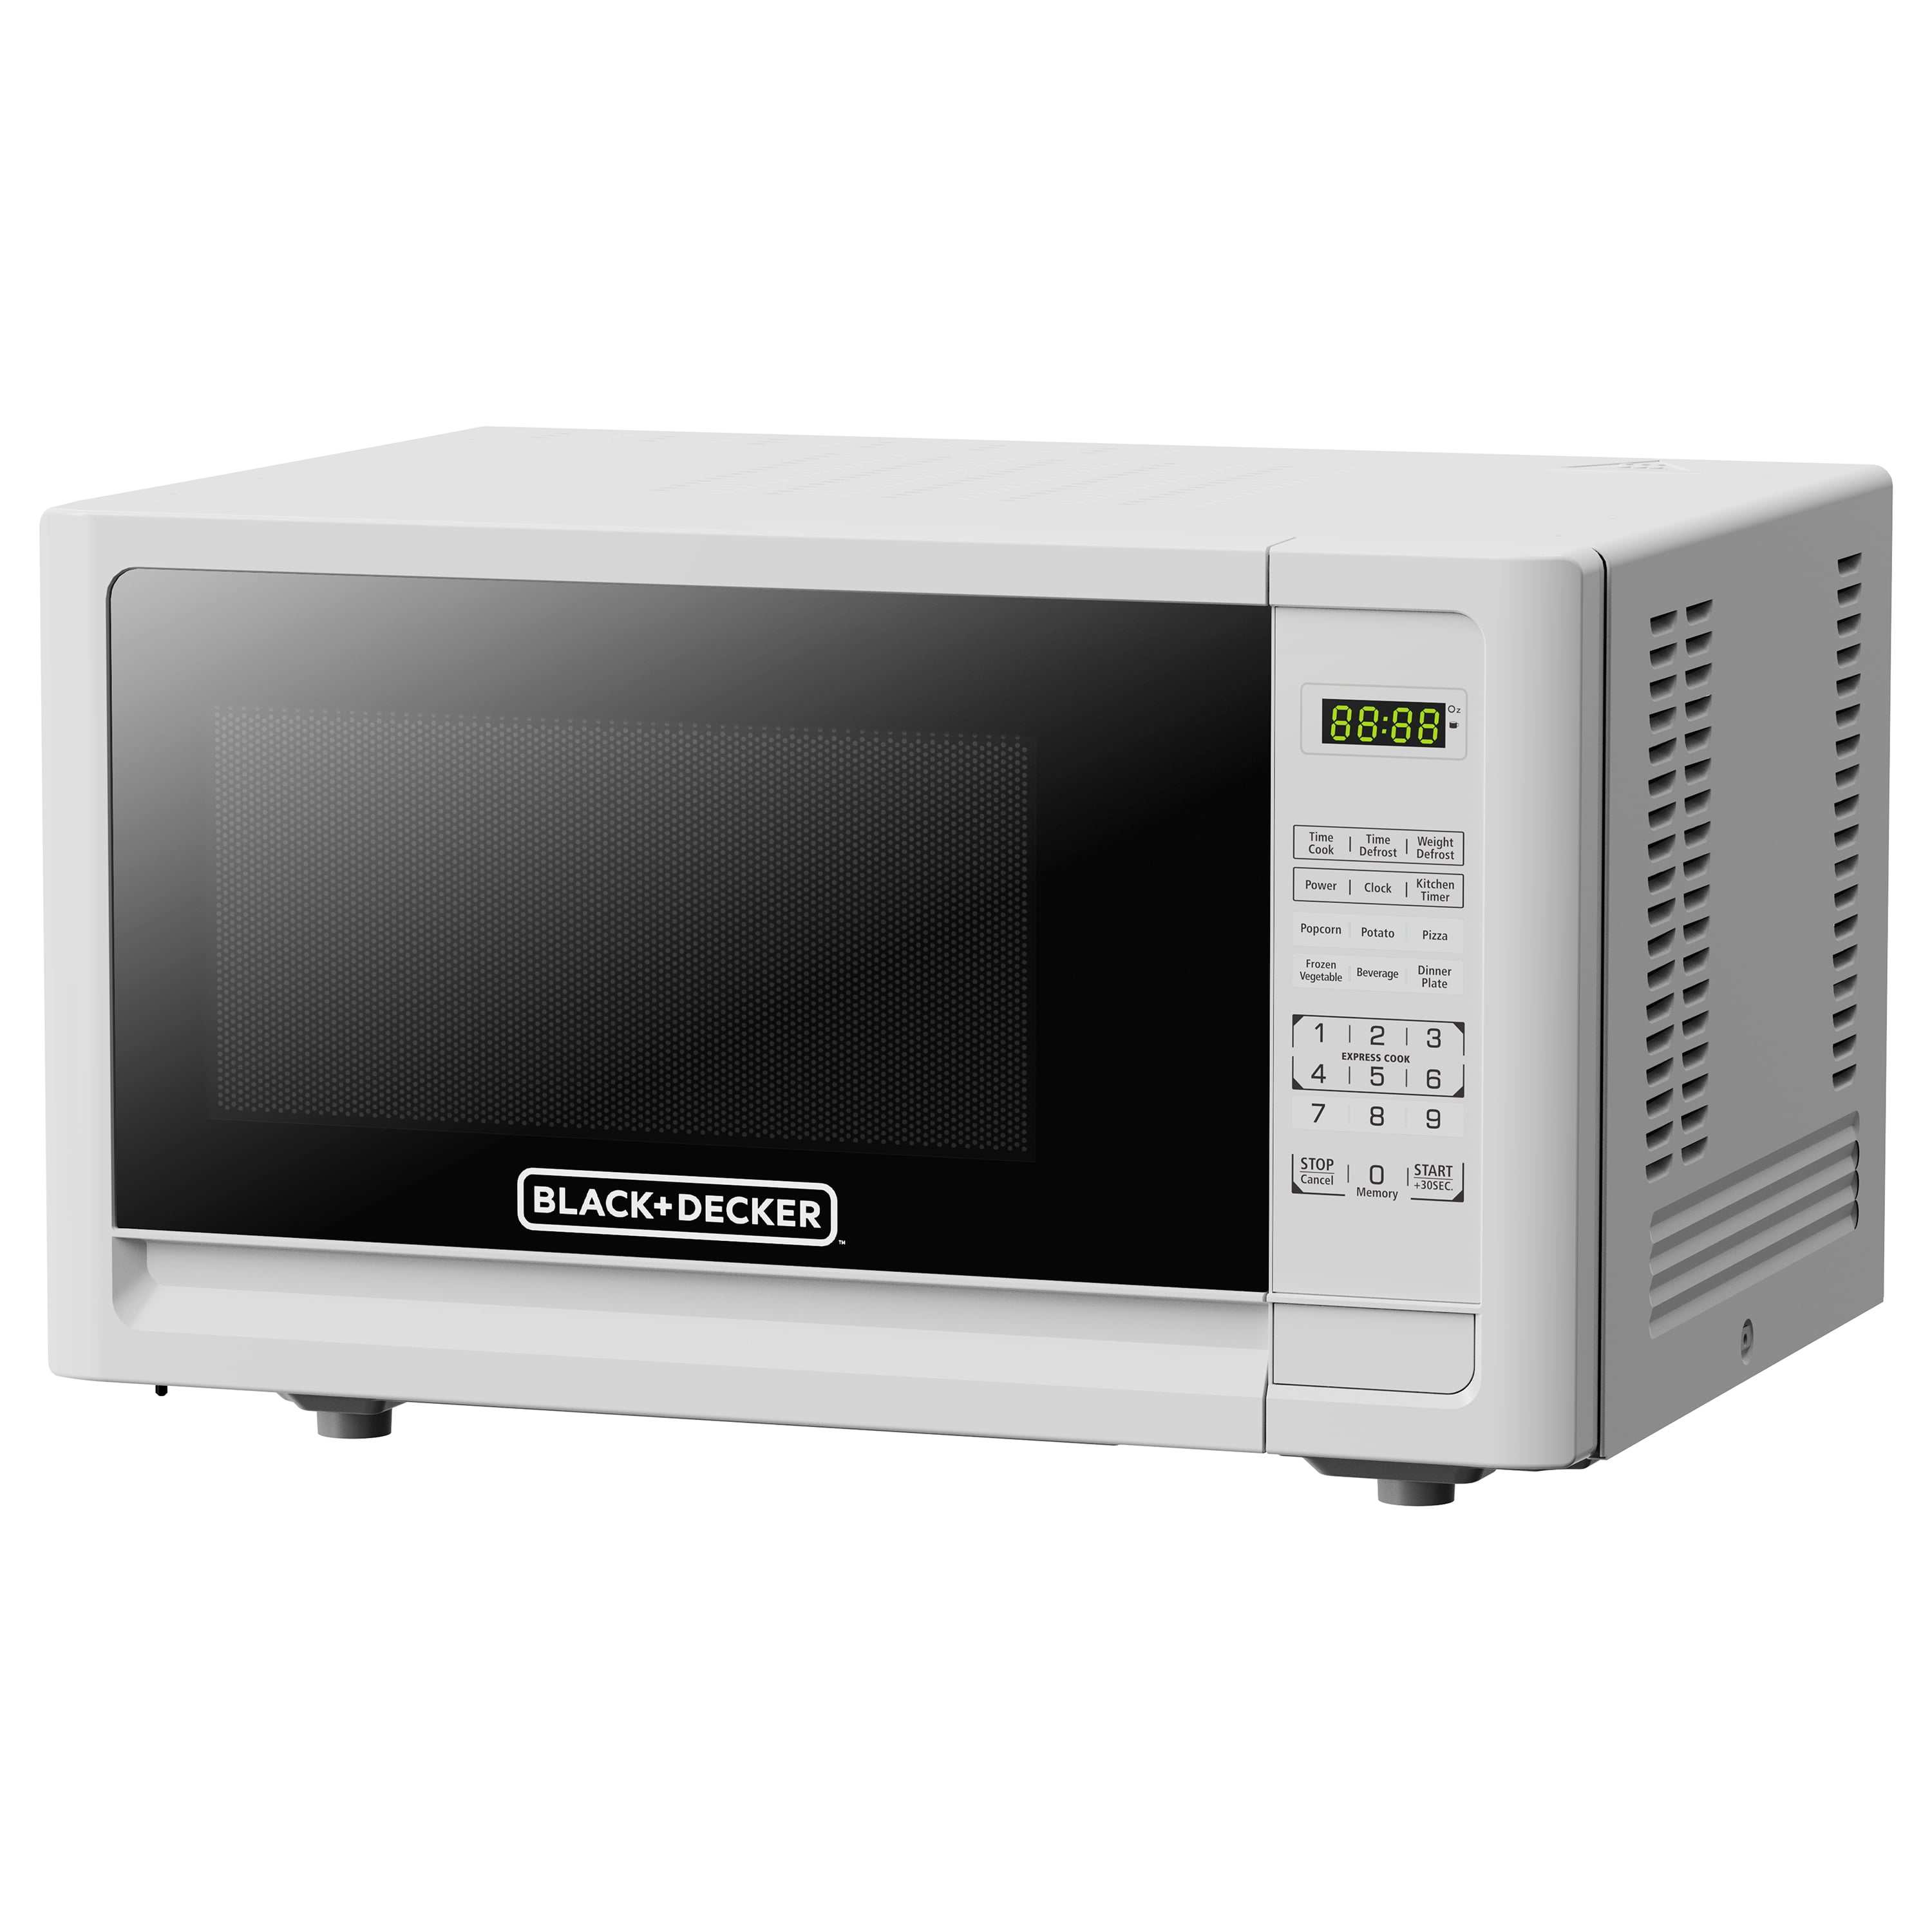 🍏 BLACK+DECKER 0.9 cu ft 900W Microwave Oven - Open Box 🆕 810004810006